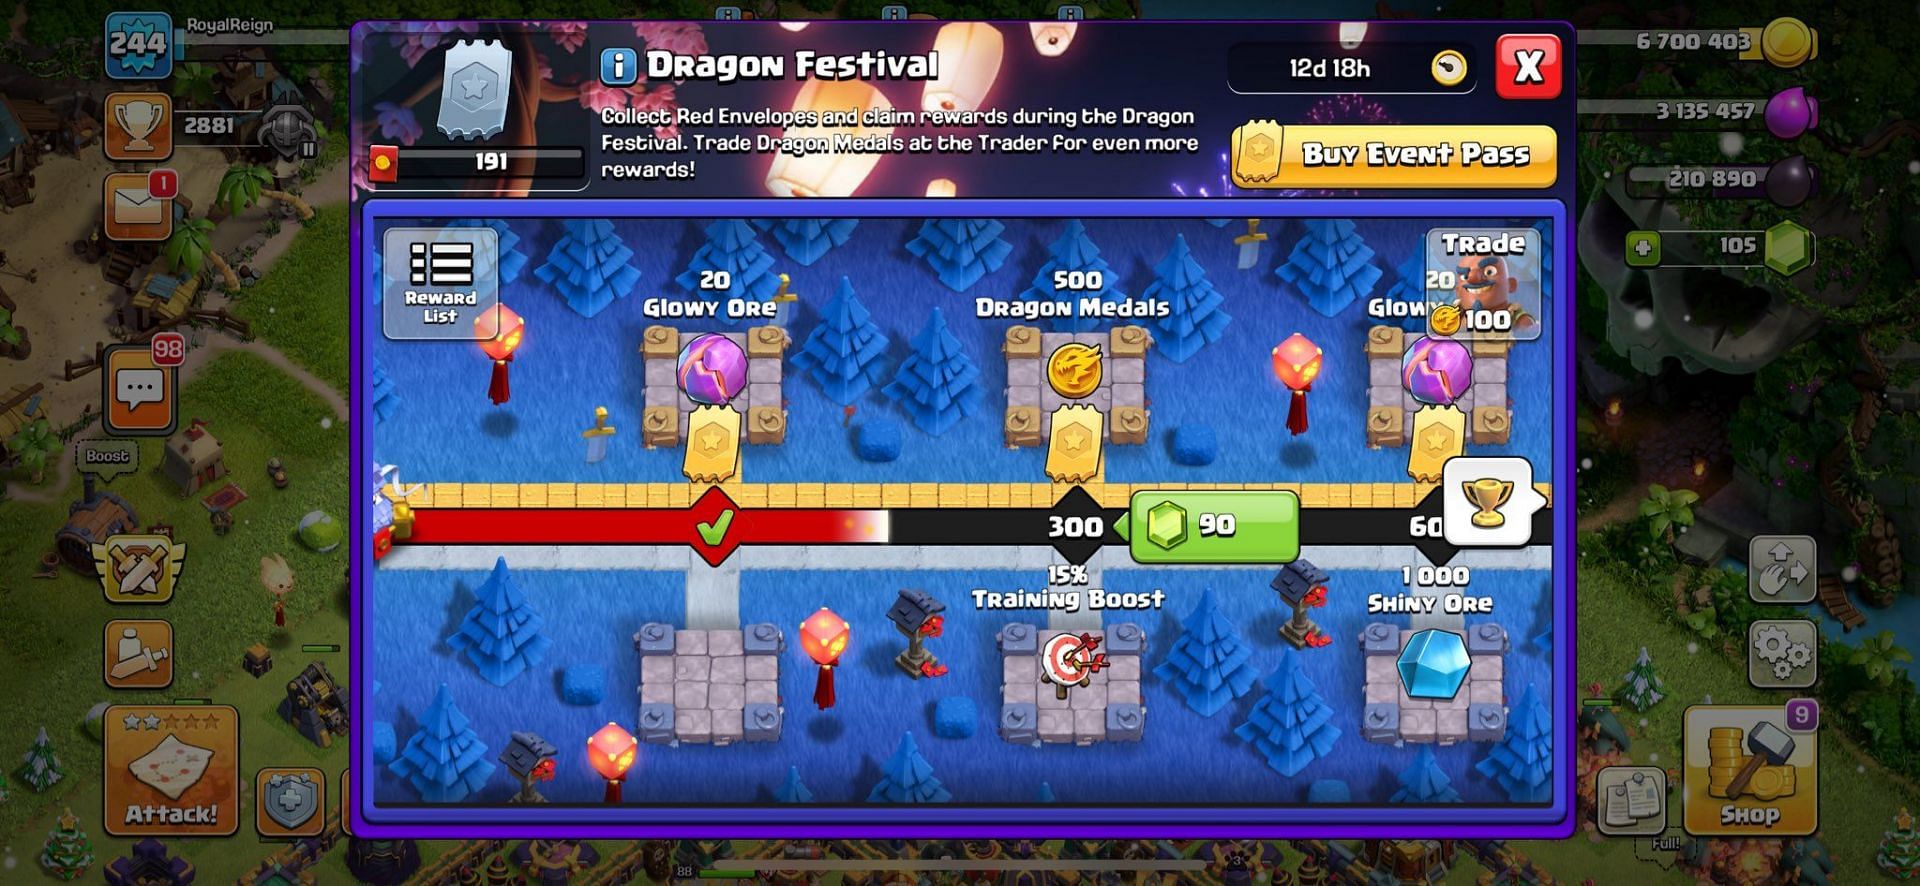 Clash of Clans Dragon Festival event rewards (Image via Supercell)